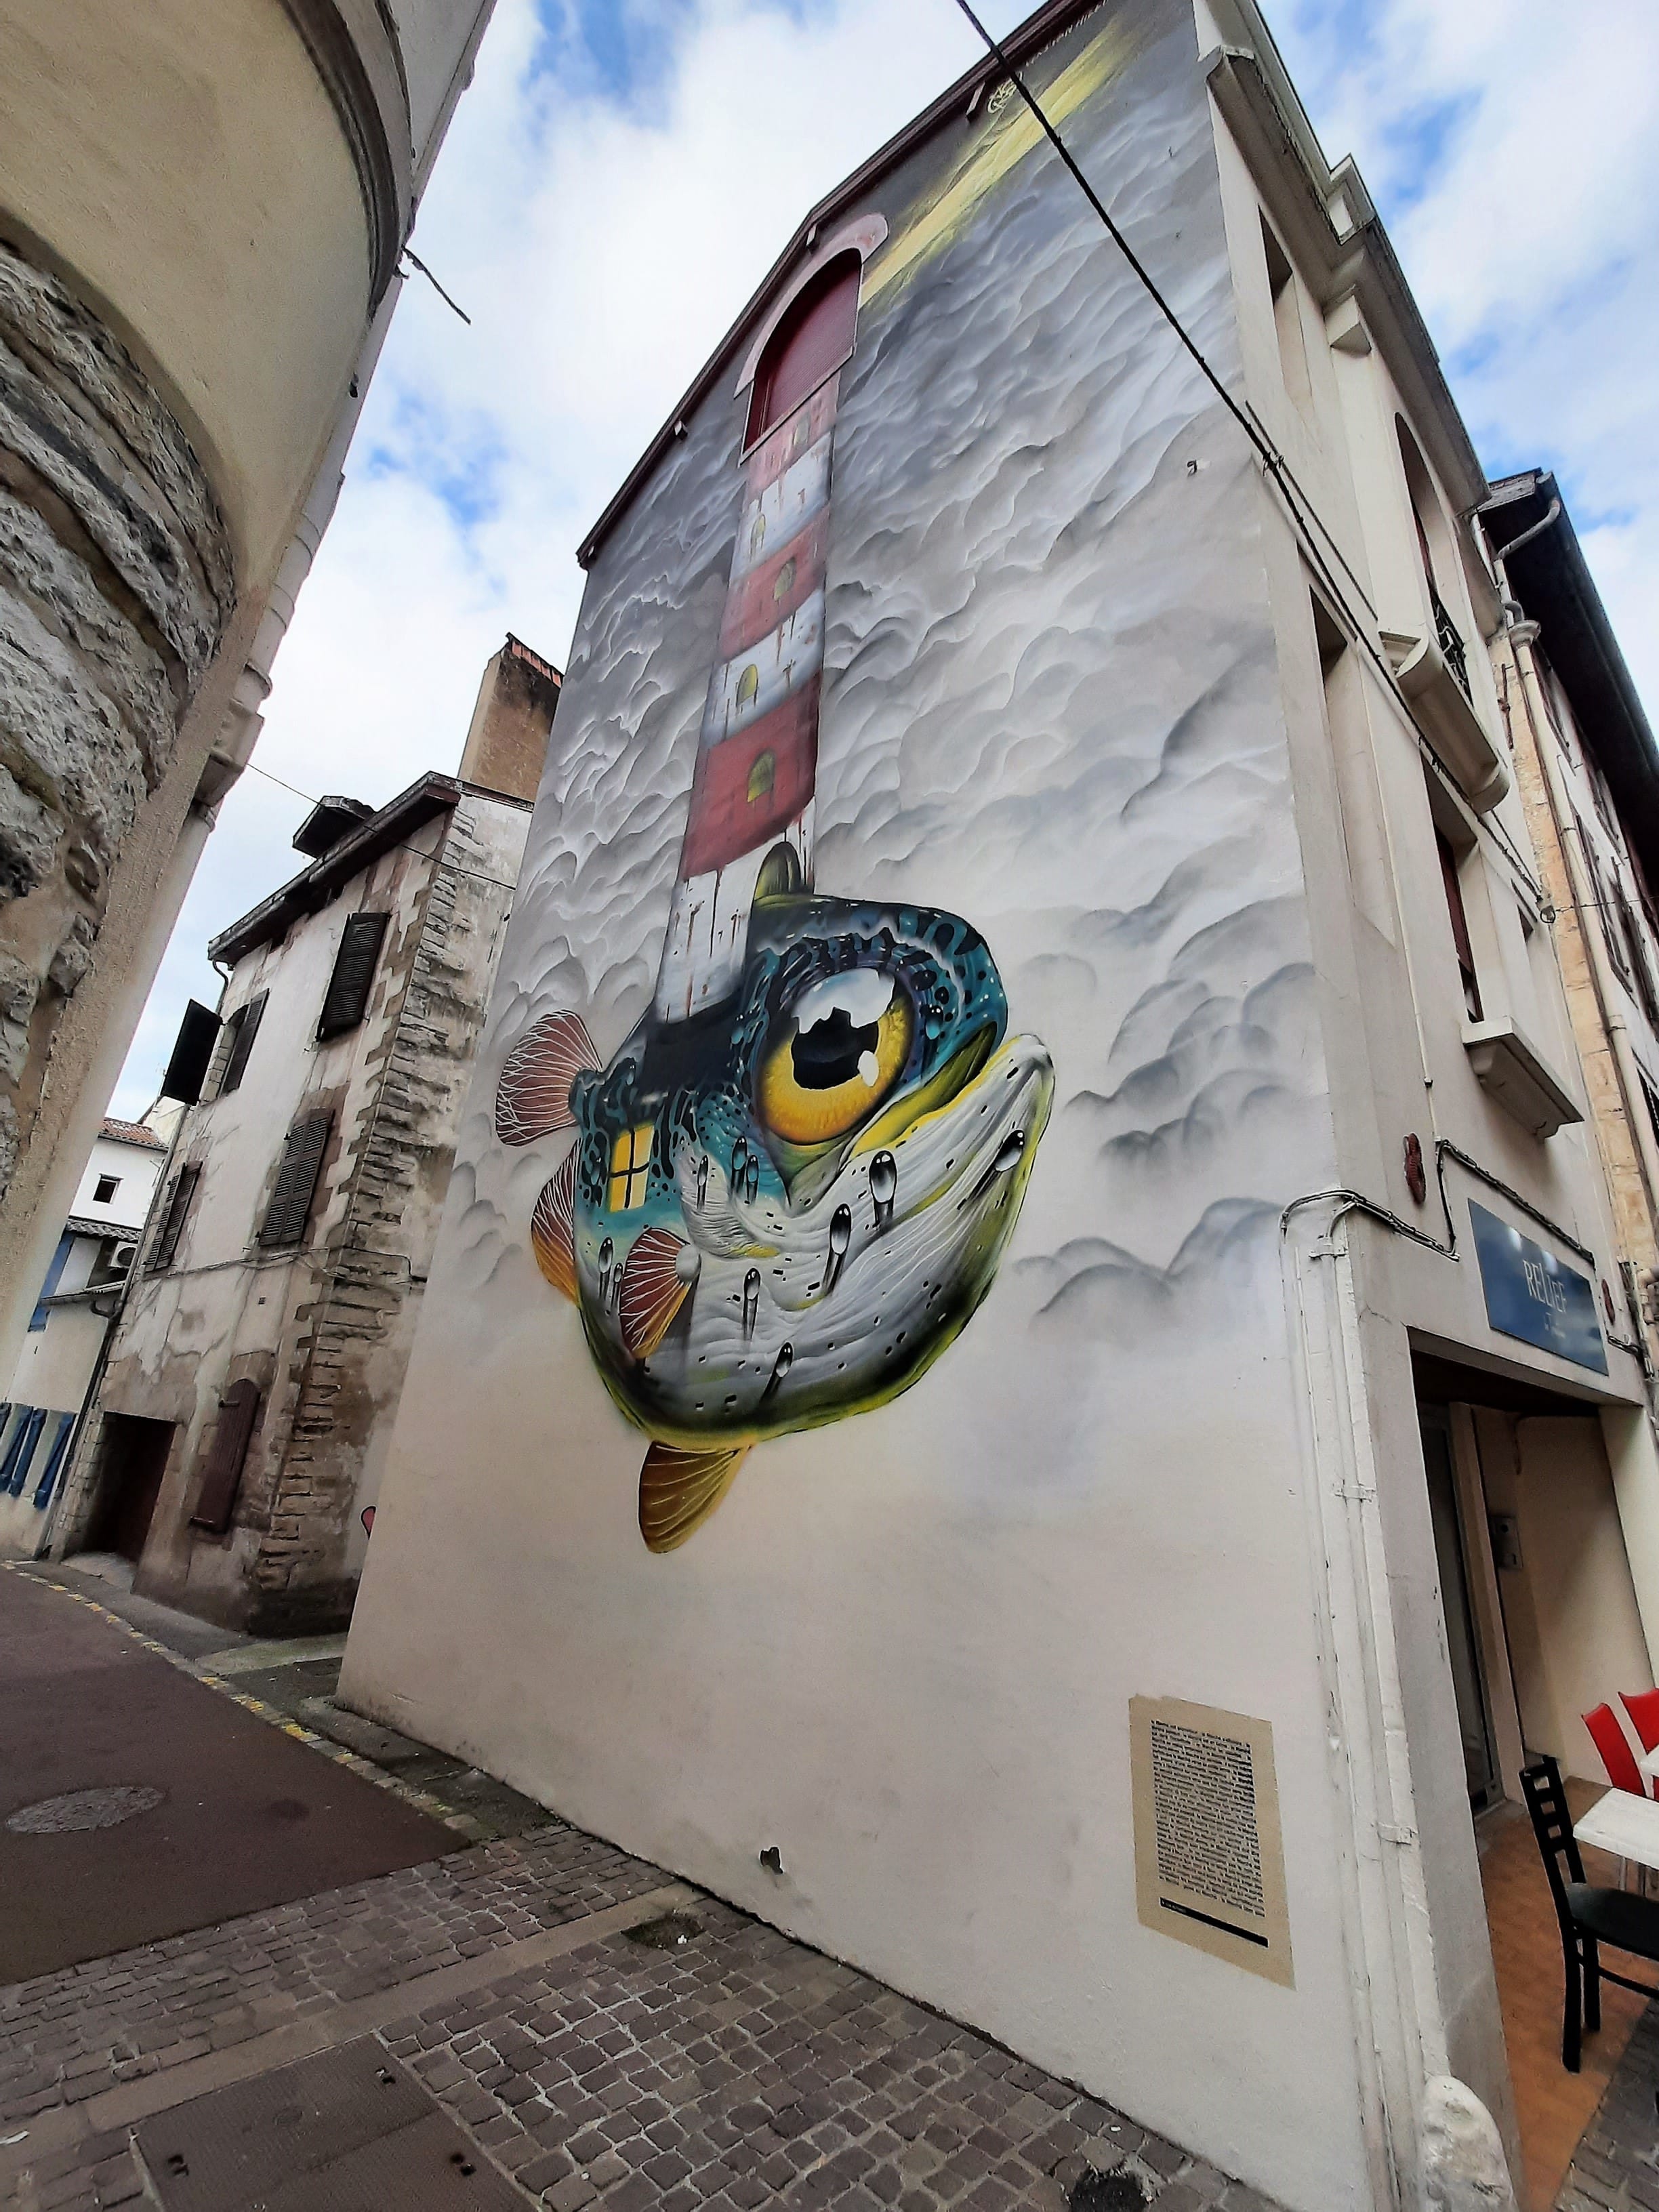 Graffiti 6316  by the artist Veks Van Hillik captured by Mephisroth in Bayonne France